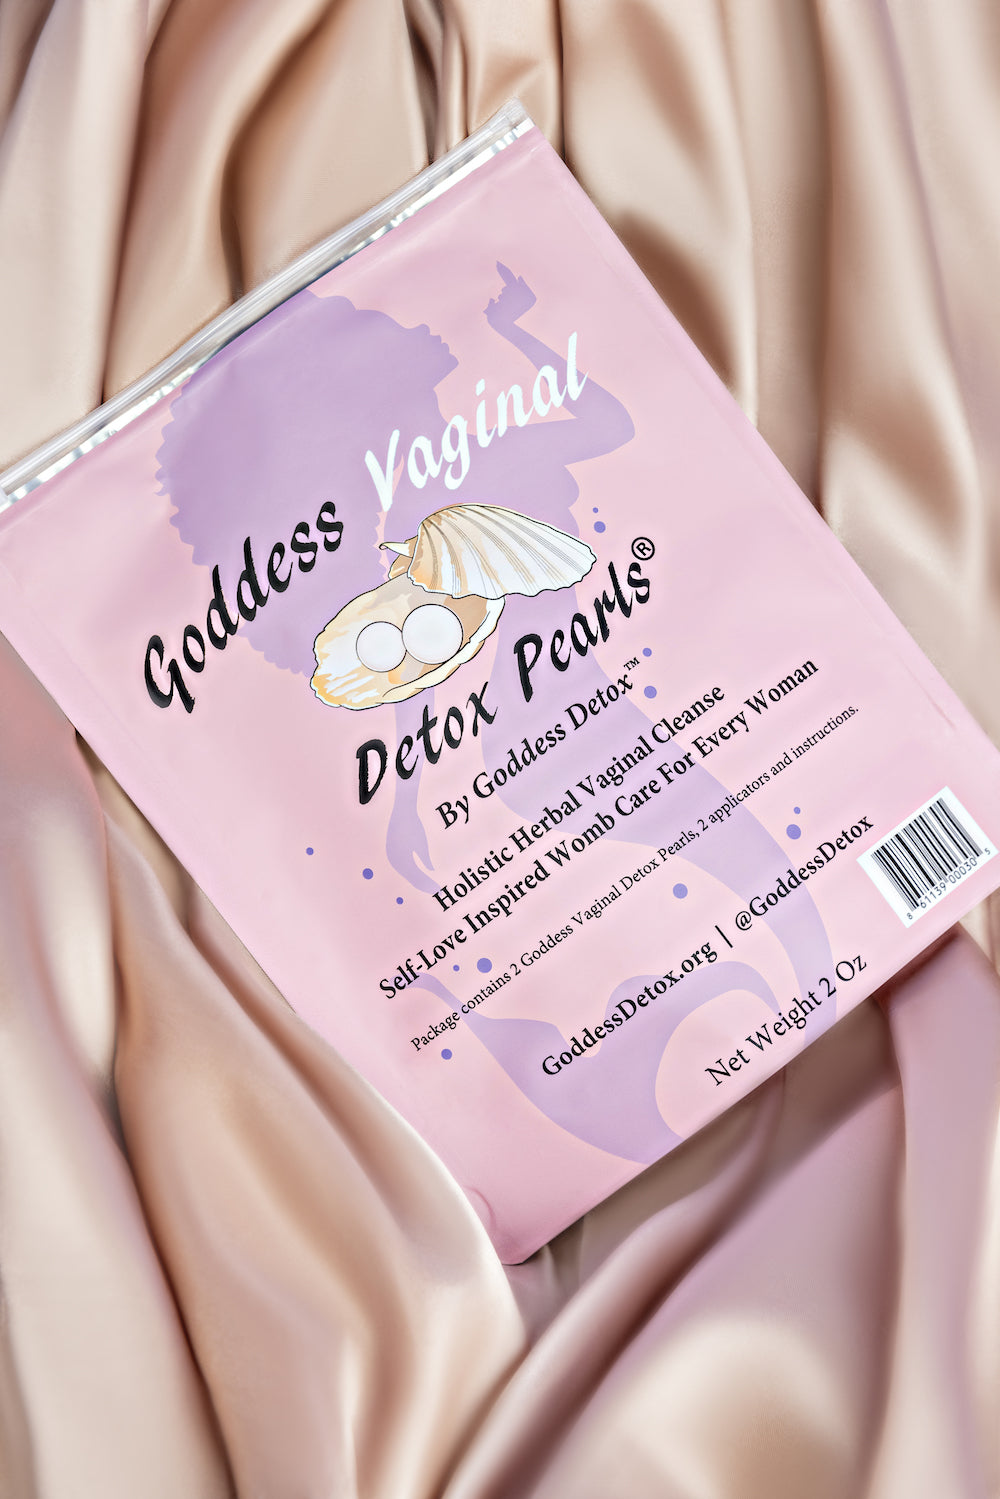 Goddess Vaginal Detox Pearls